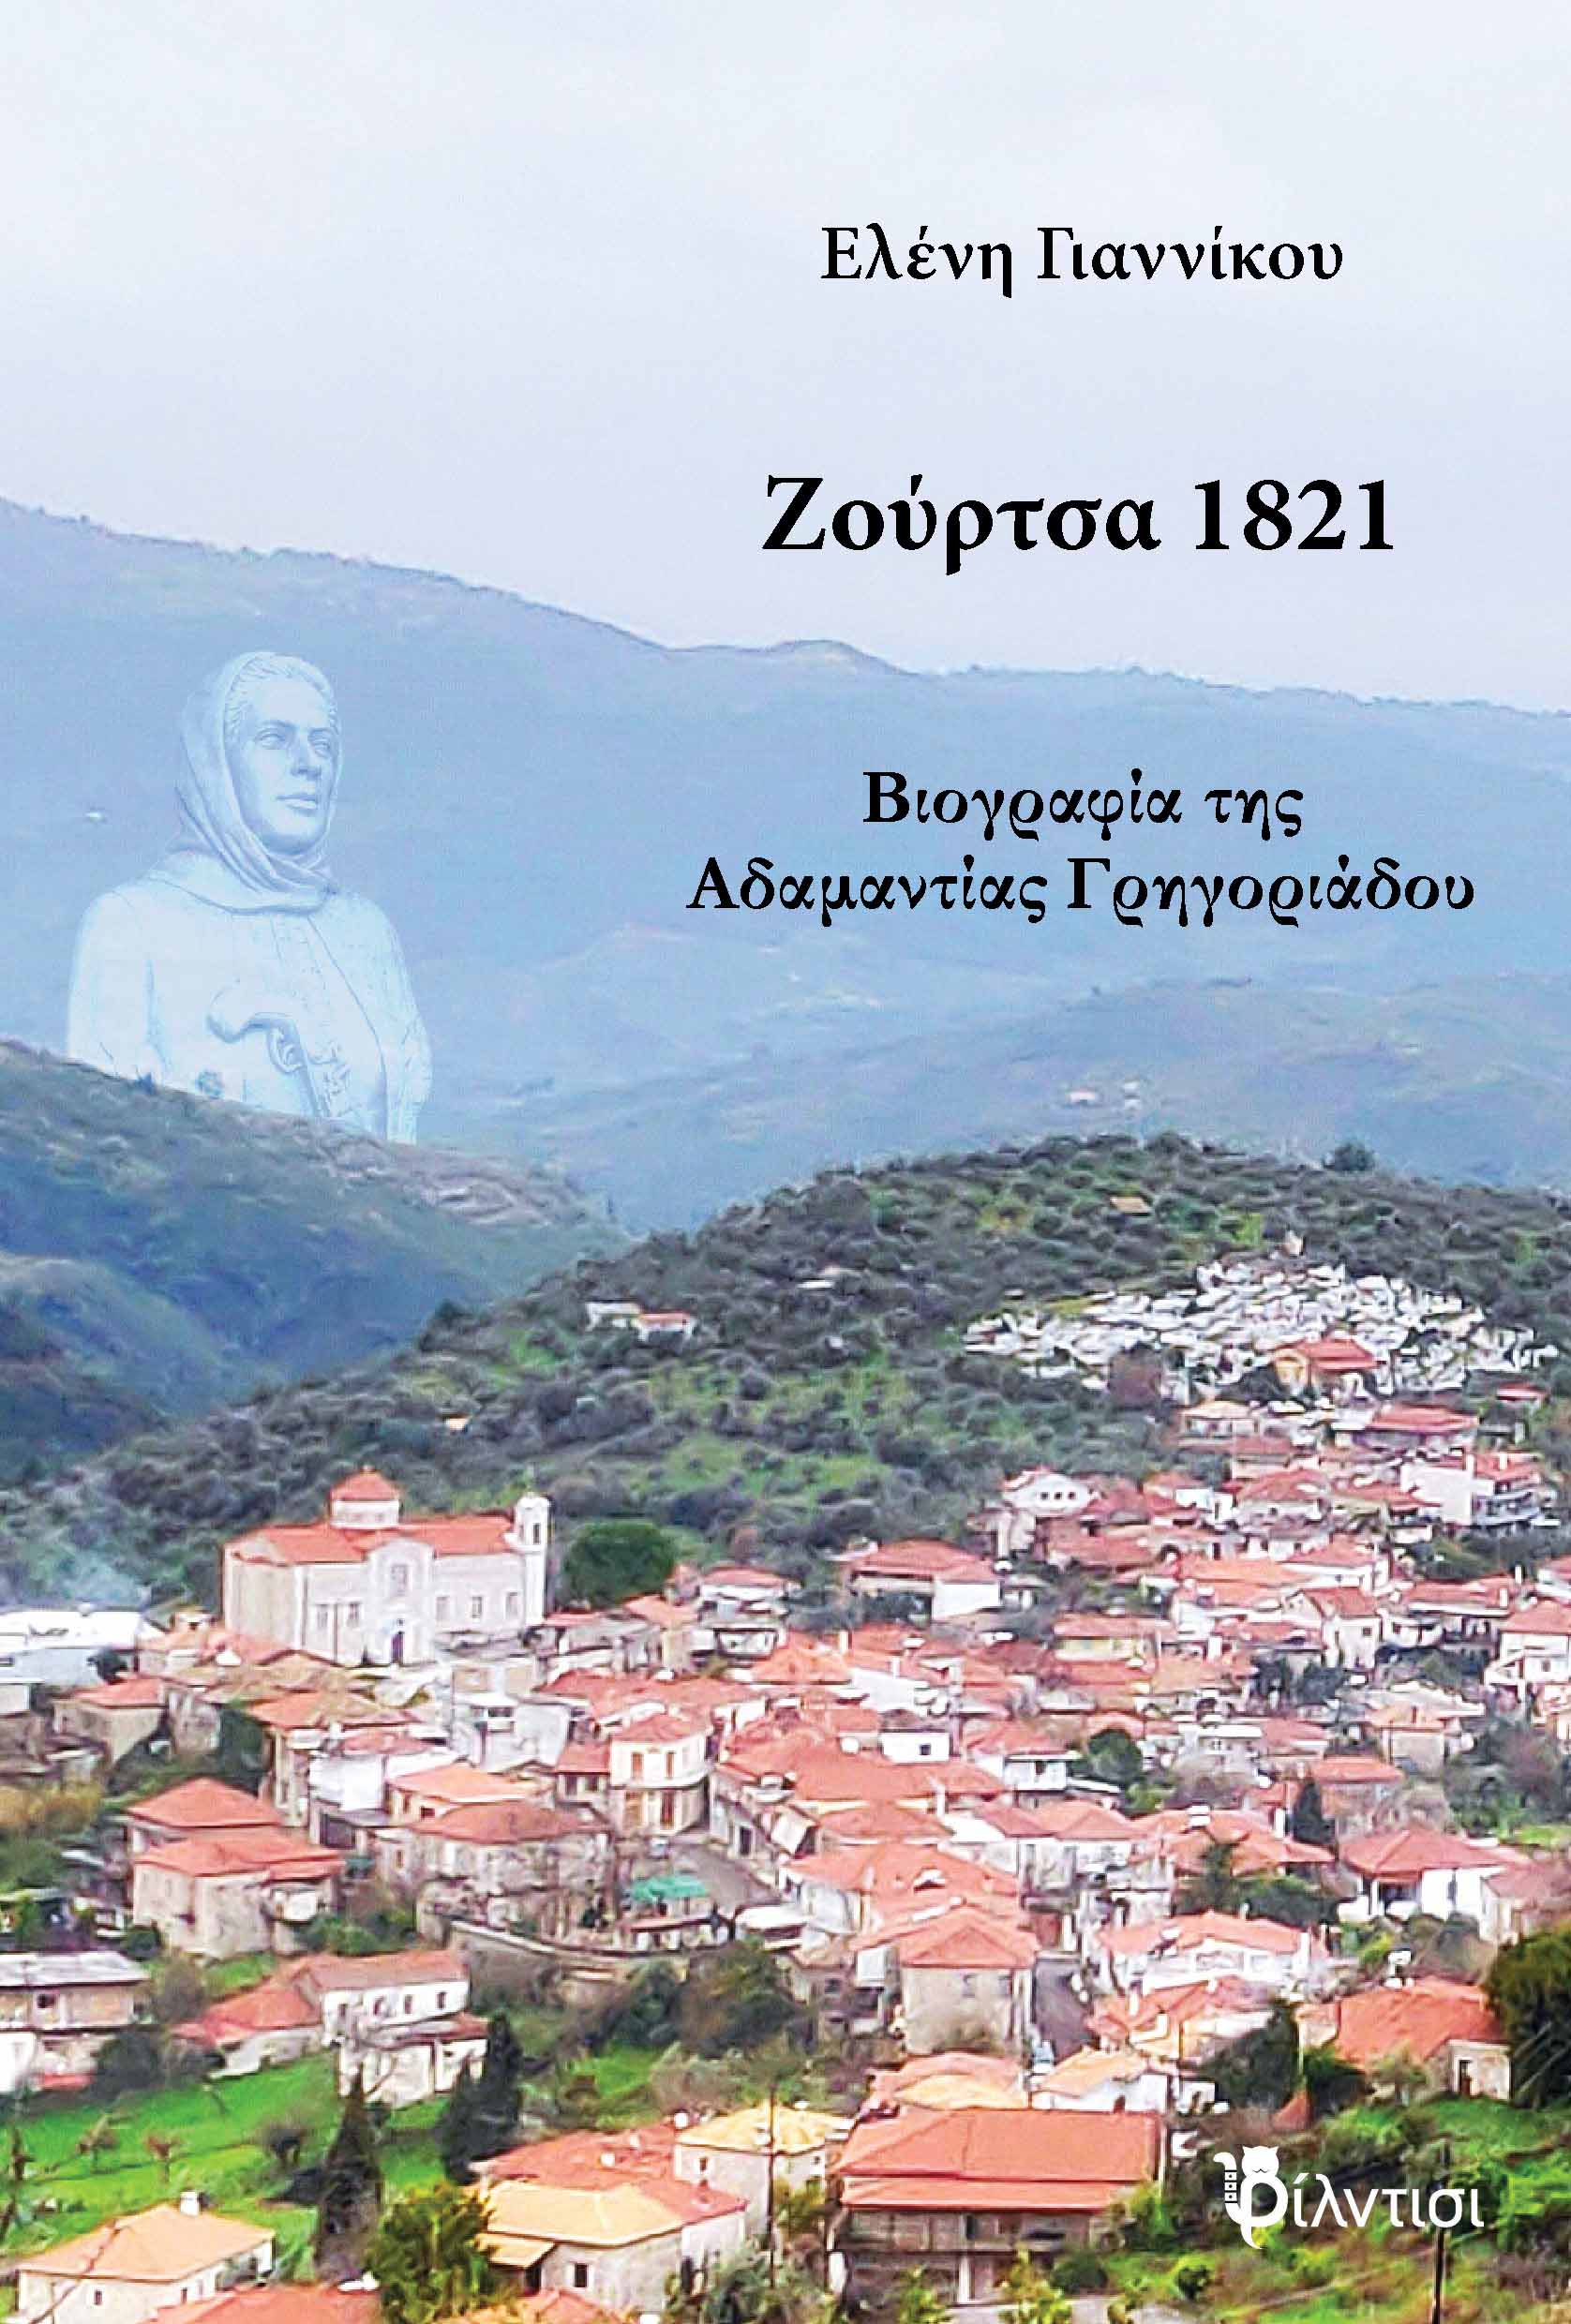 You are currently viewing Ελένη Γιαννίκου: Ζούρτσα 1821 –βιογραφία της Αδαμαντίας Γρηγοριάδου, εκδ. Φίλντισι